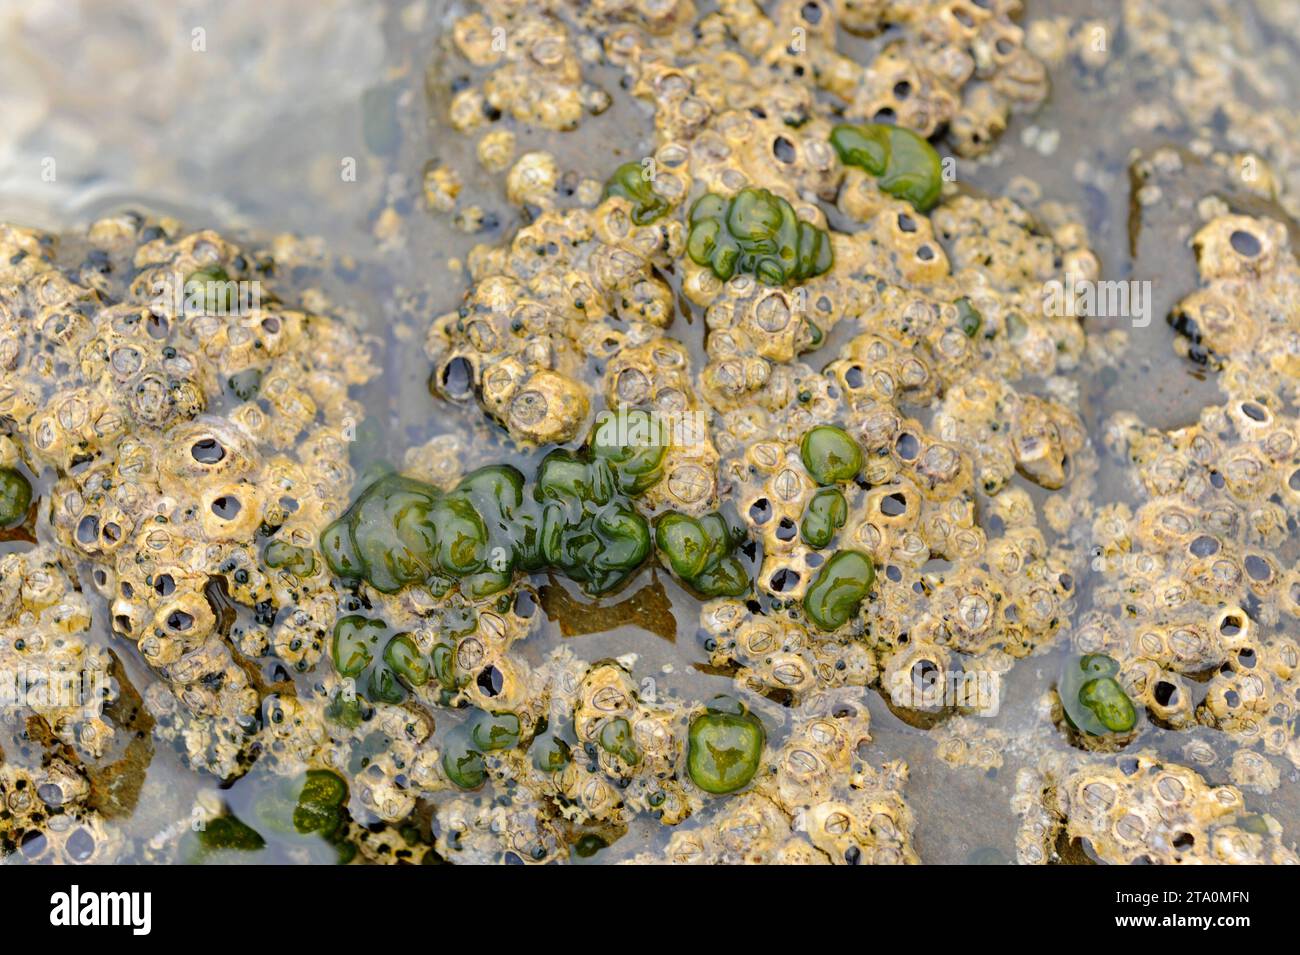 Codium coralloides green alga next to barnacles colony (Chthamalus sp.). This photo was taken in Cap Ras coast, Costa Brava, Girona province, Cataloni Stock Photo